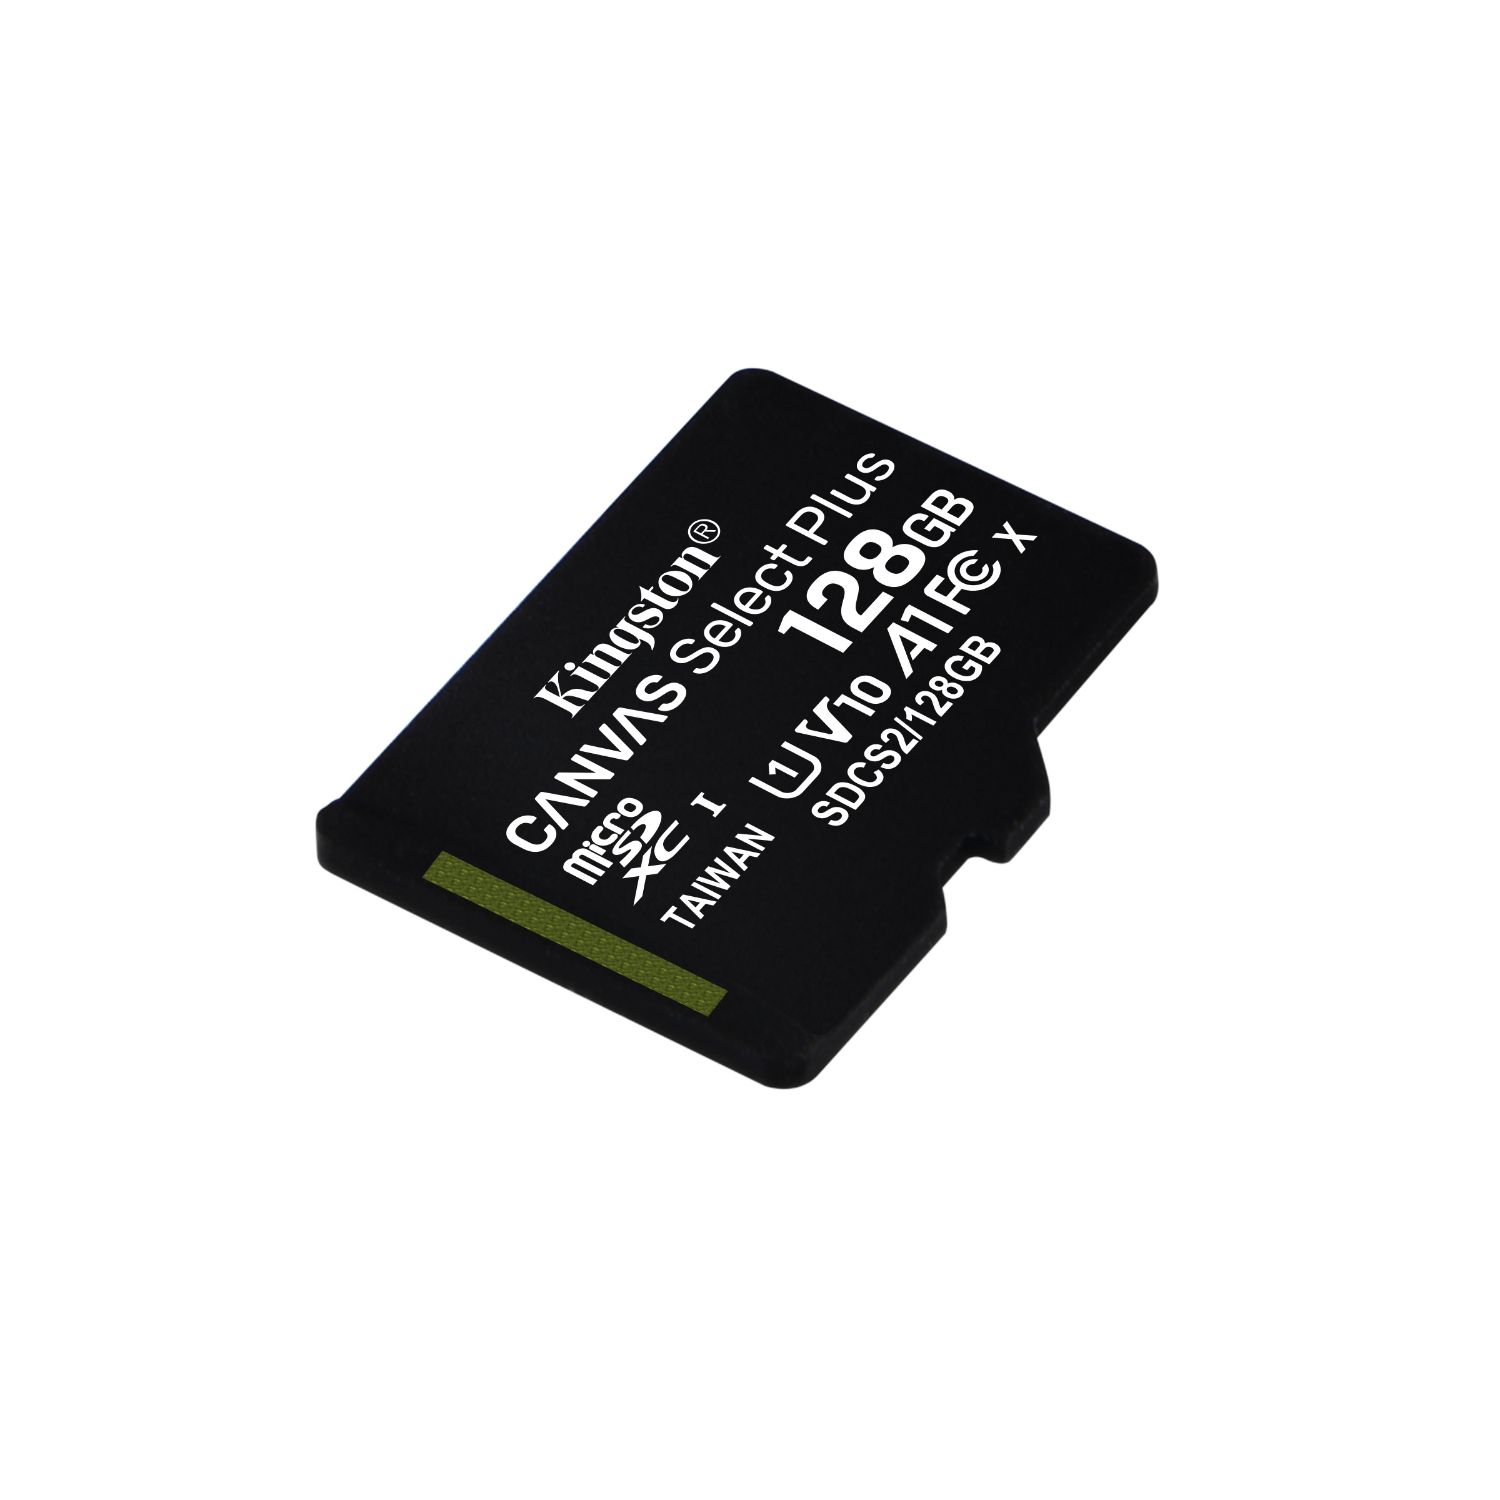 SDCS2/128GBSP - Kingston Micro SD HC Canvas Plus 128Gb Clase 10 (SDCS2/128GBSP)